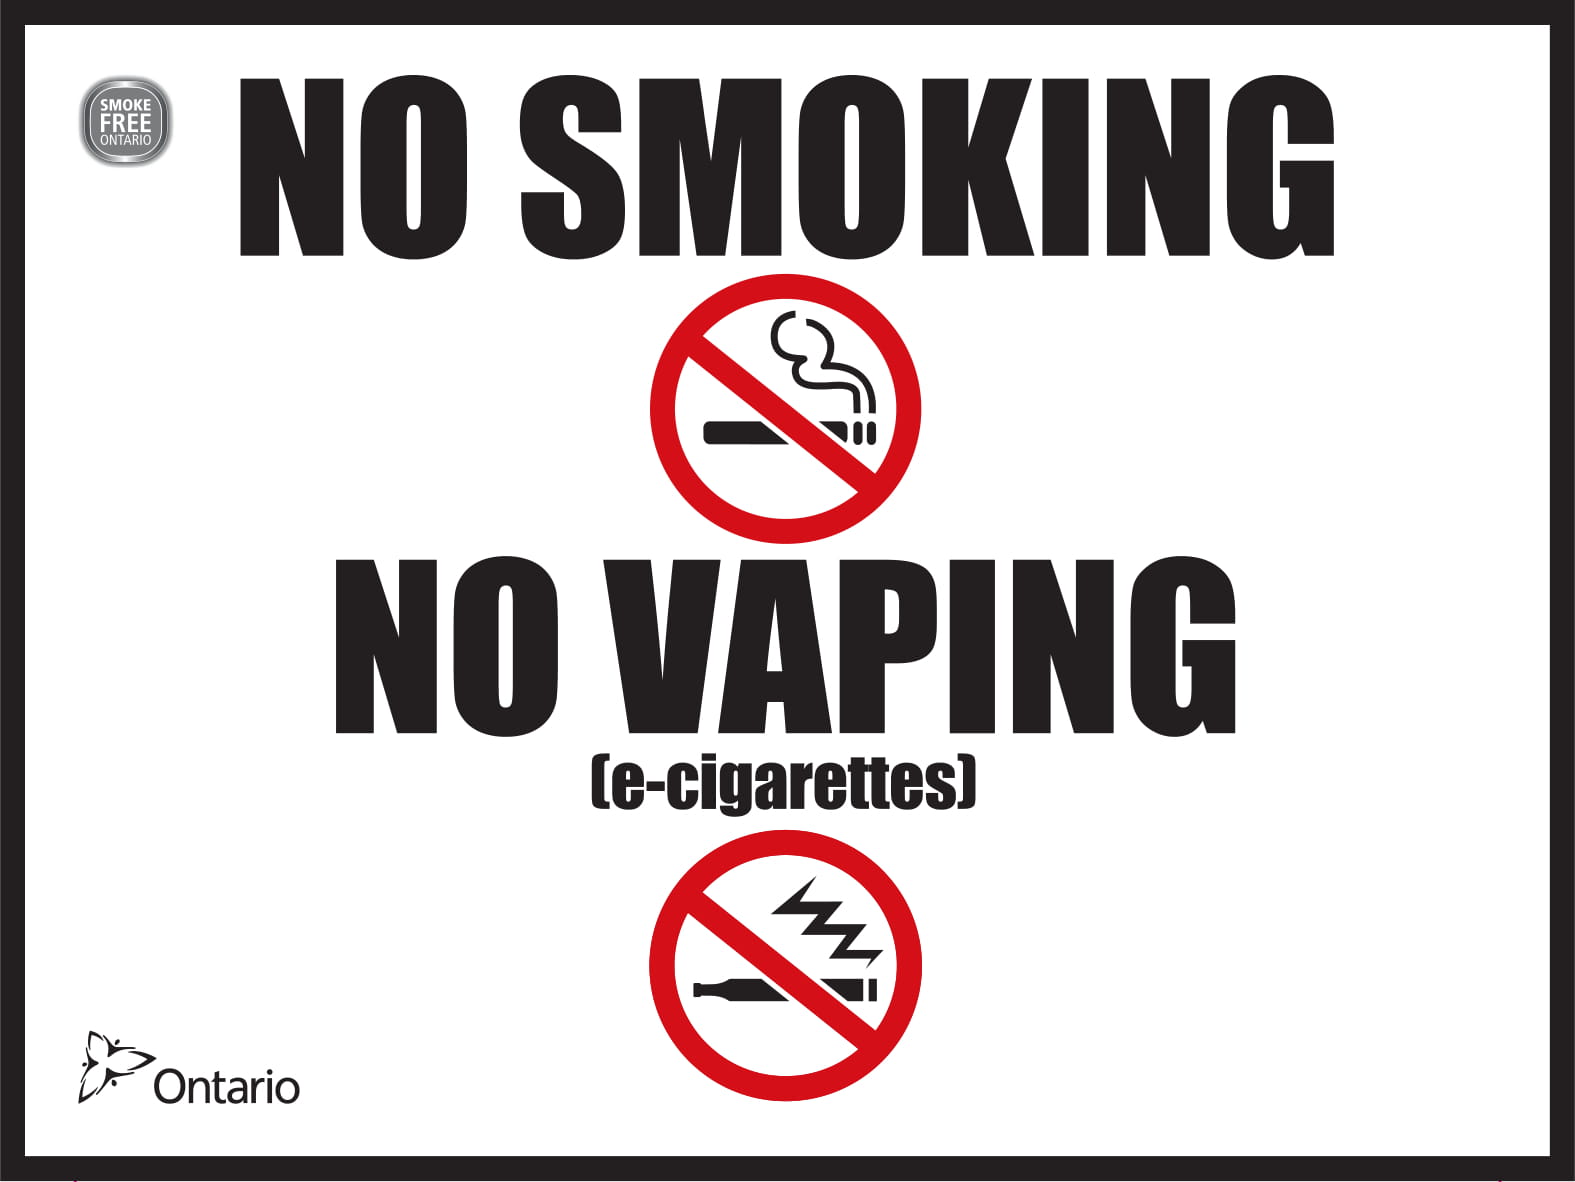 No smoking and no vaping dual sign